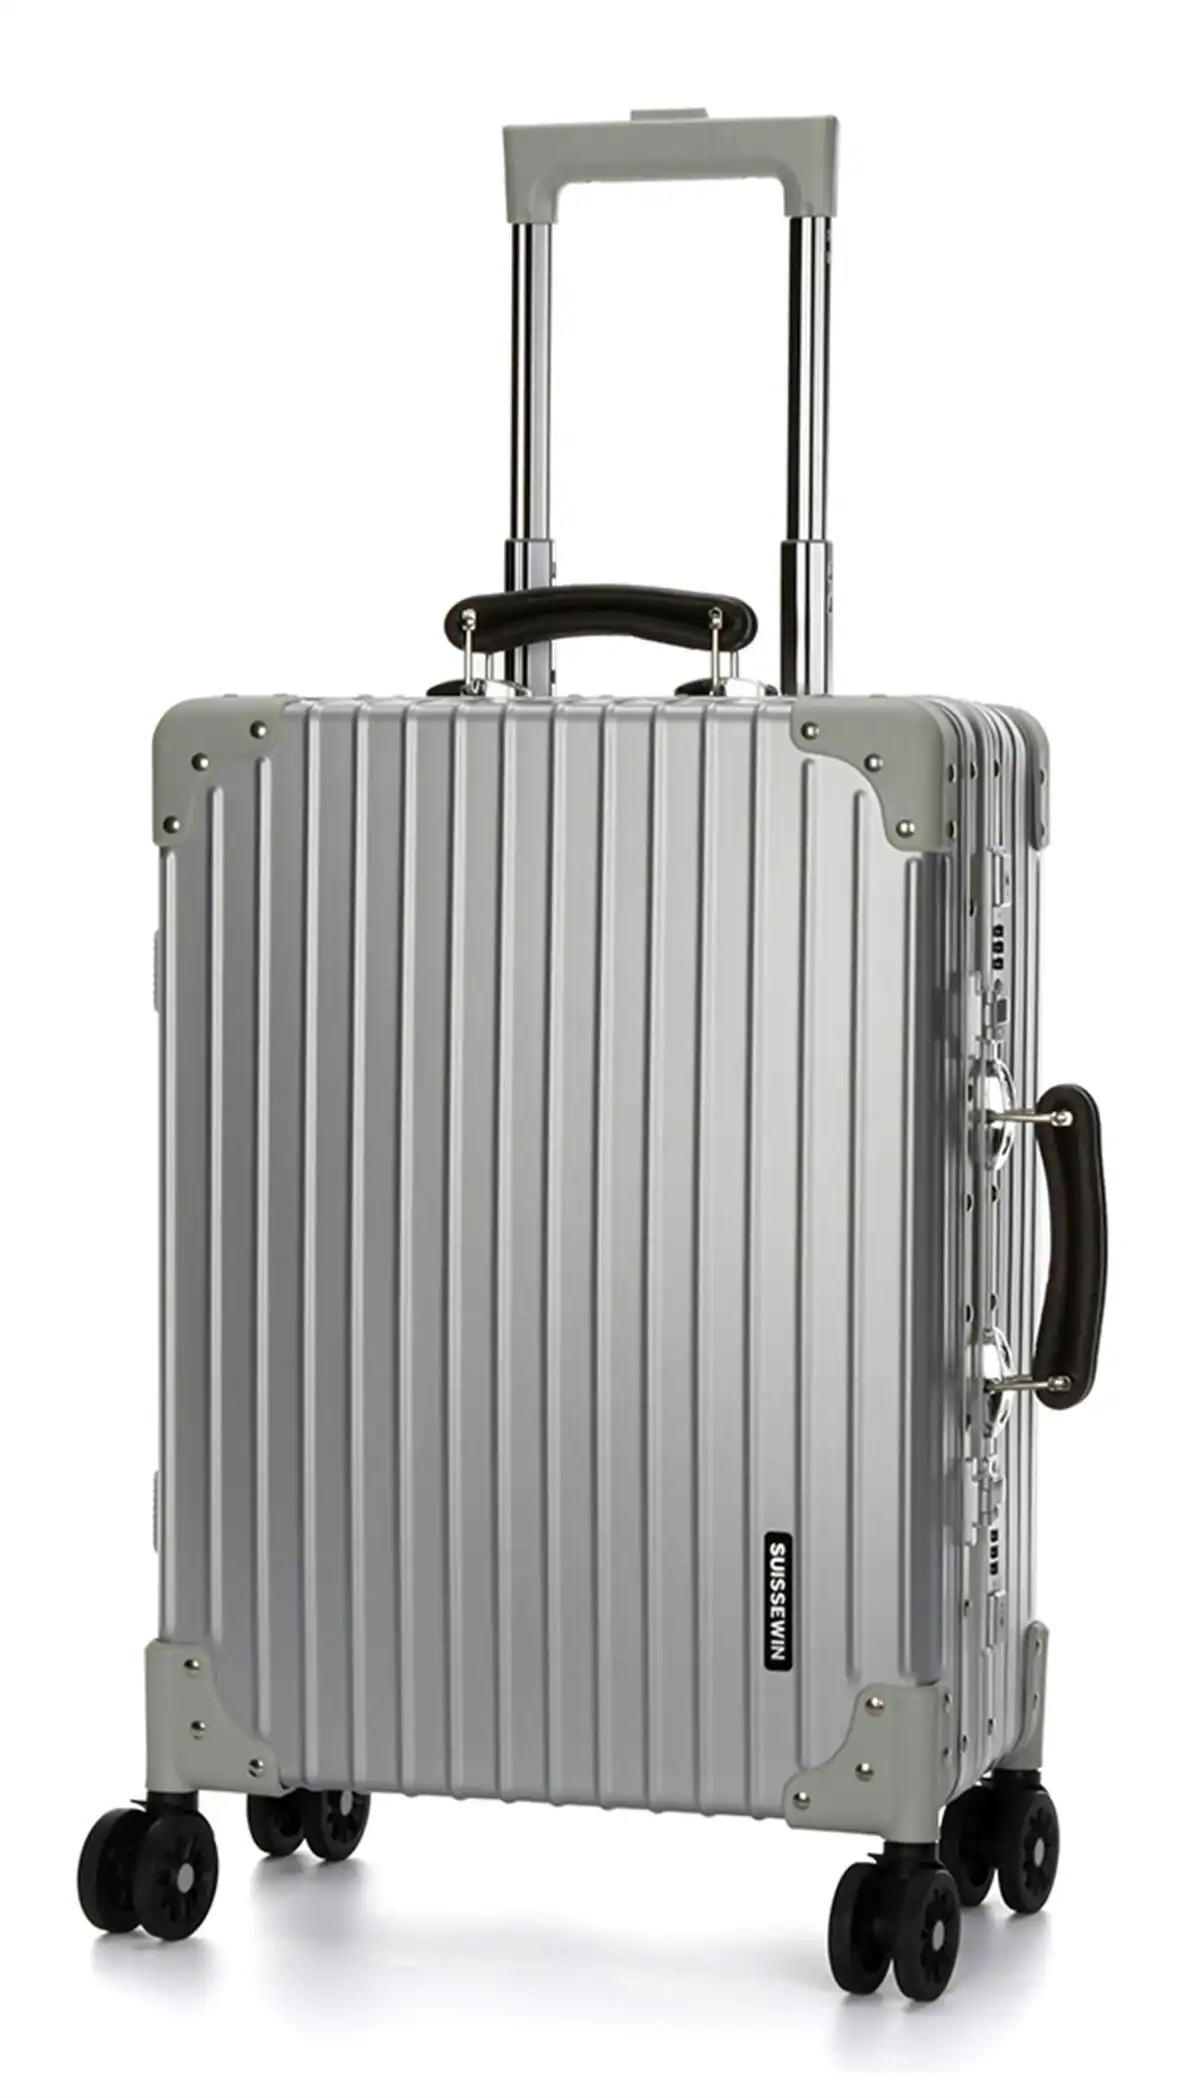 Suissewin Swiss Aluminium Luggage Suitcase Lightweight TSA locker 8 wheels Carry On HardCase SN7611A Silver